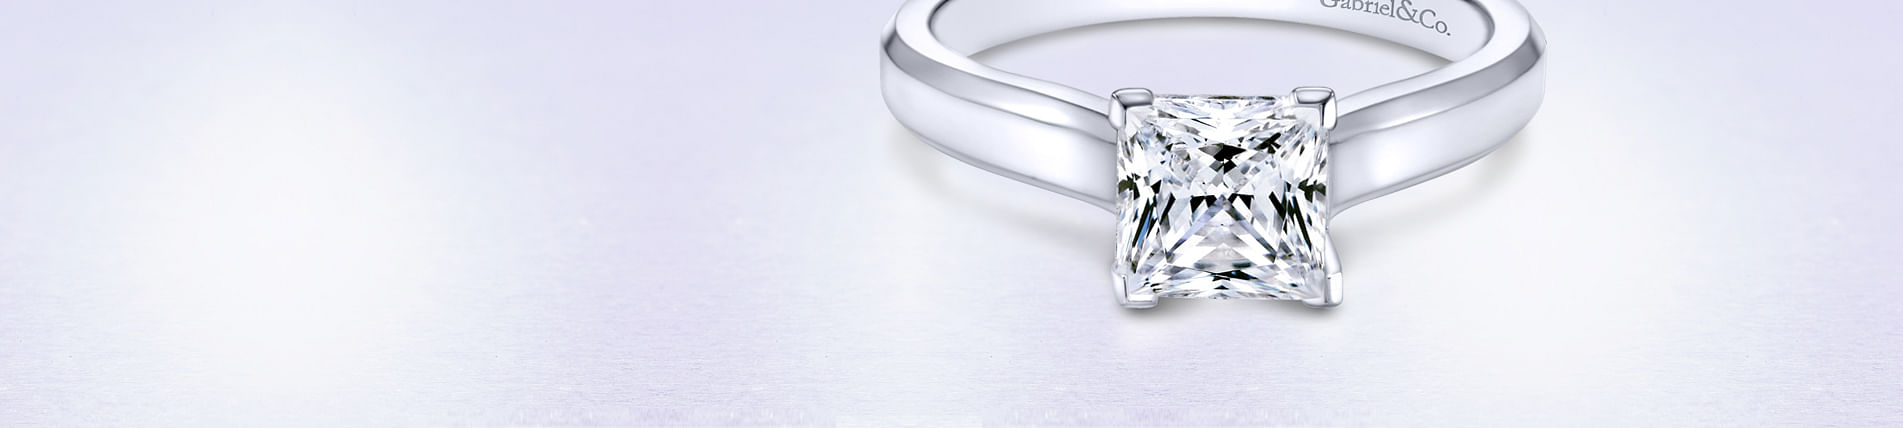 14K White Gold Princess Cut Diamond Engagement Ring angle 